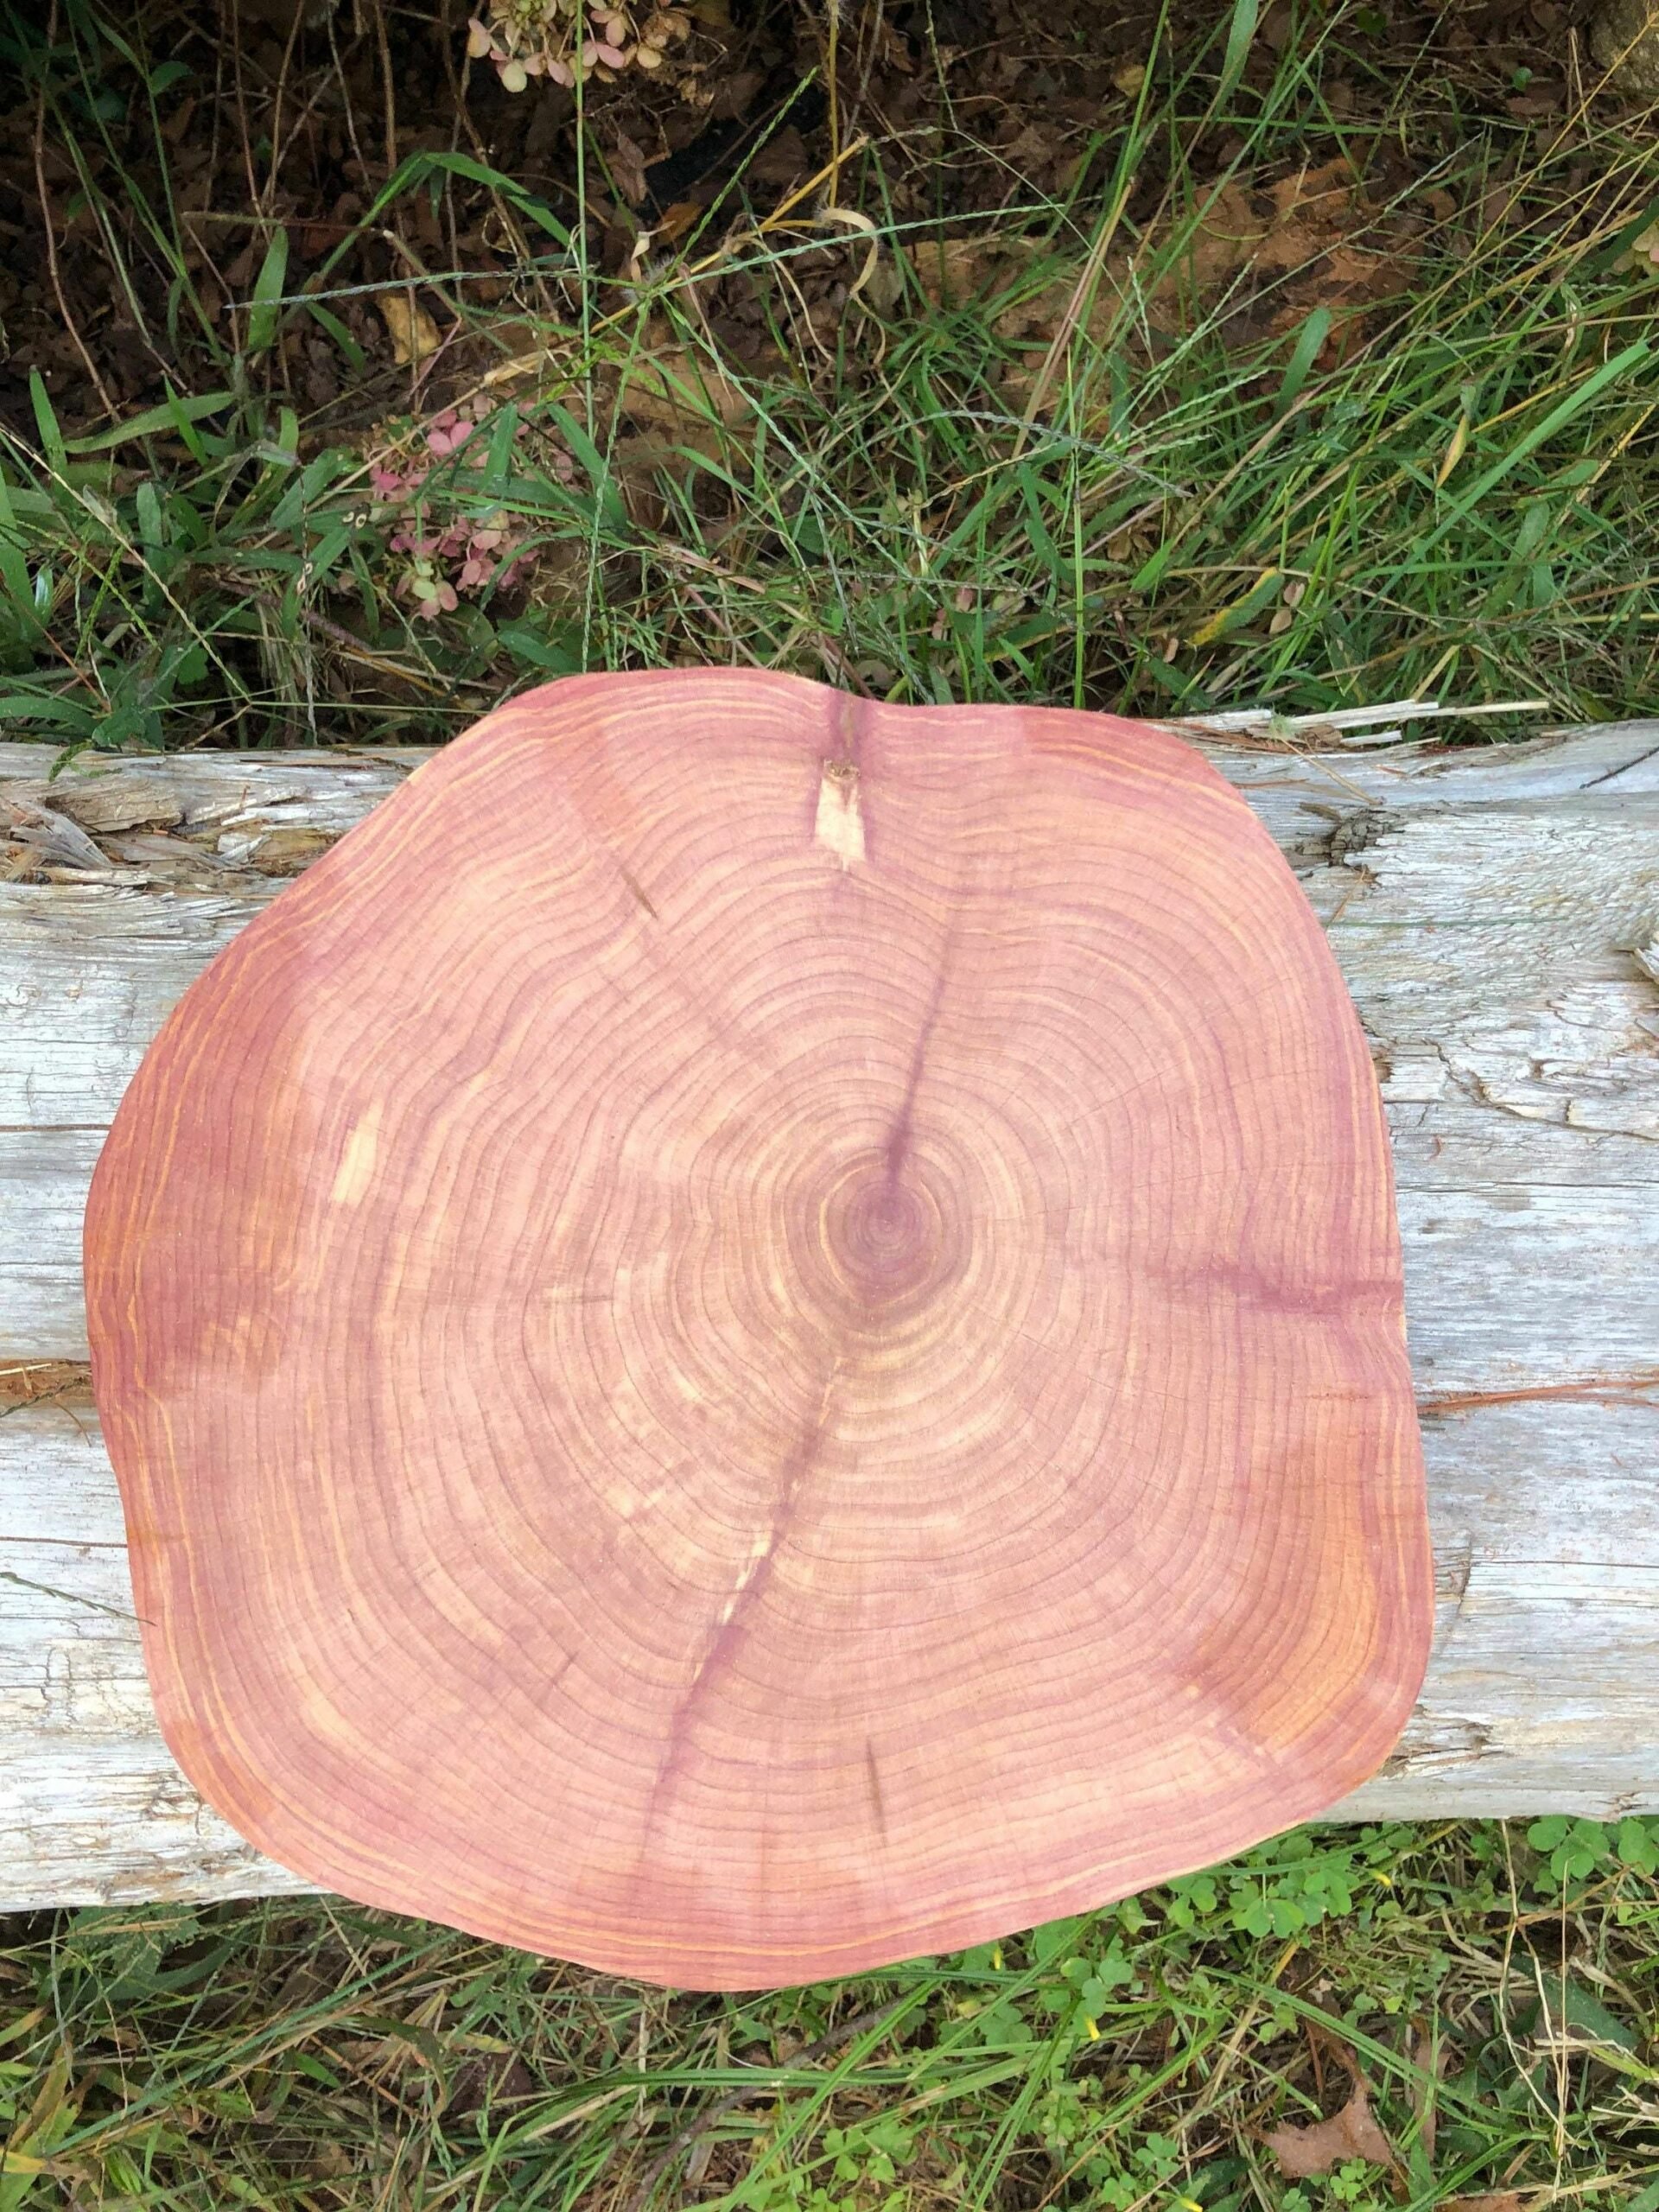 Cedar Wood: Origin, type and uses